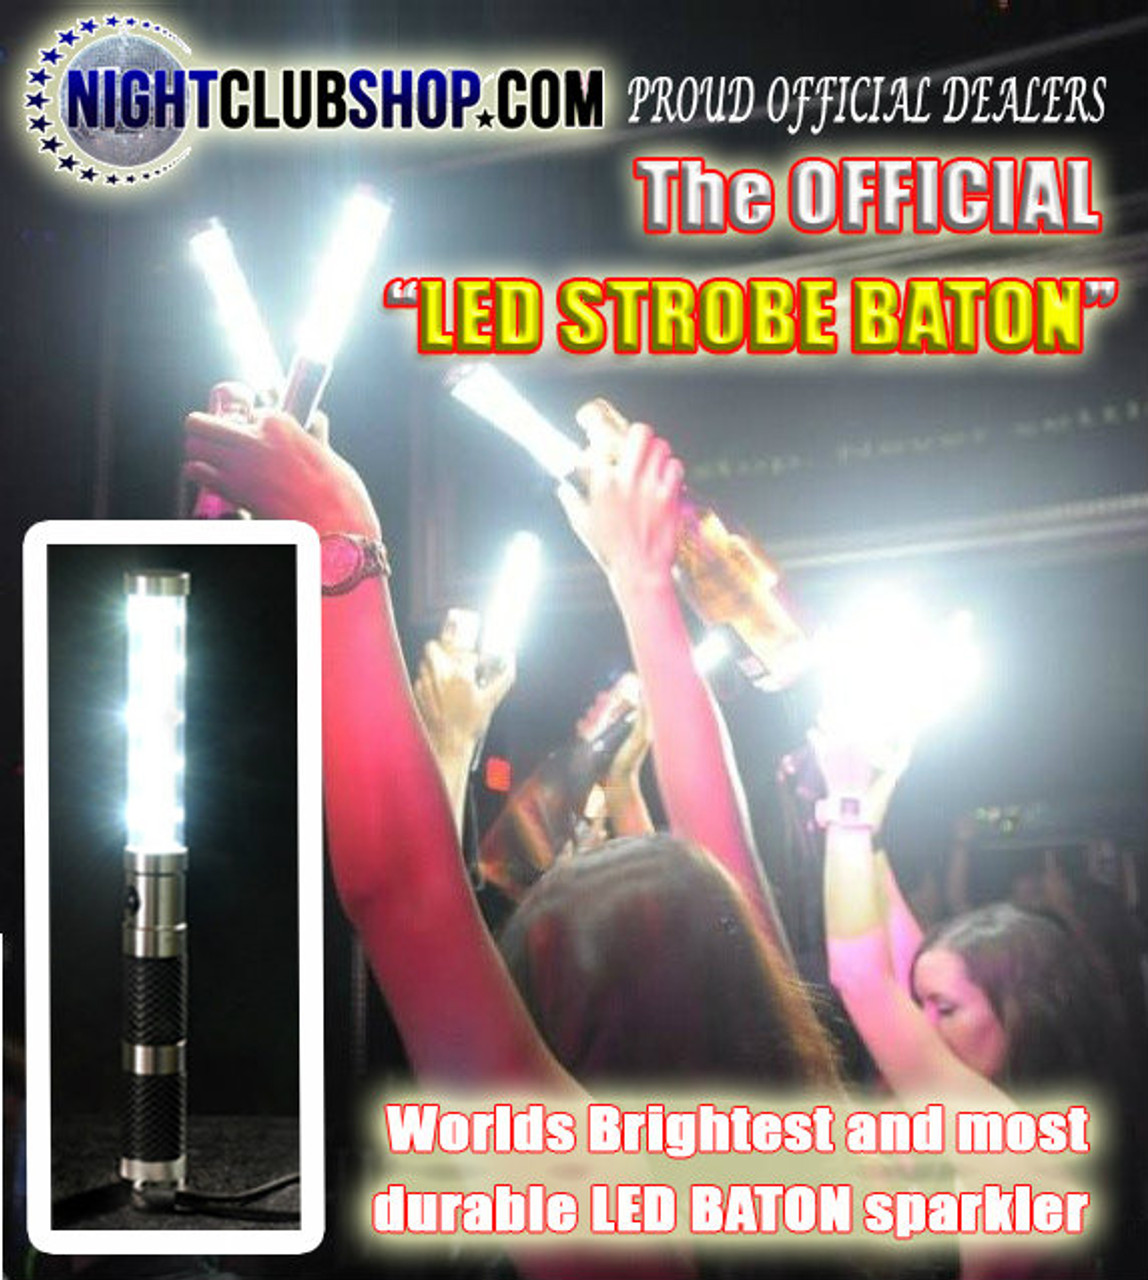 LED STROBE BATON, LED, STROBE, BATON, Electronic, flash, wand,bottle service, bottle delivery, alternative, sparkler, bottle sparkler